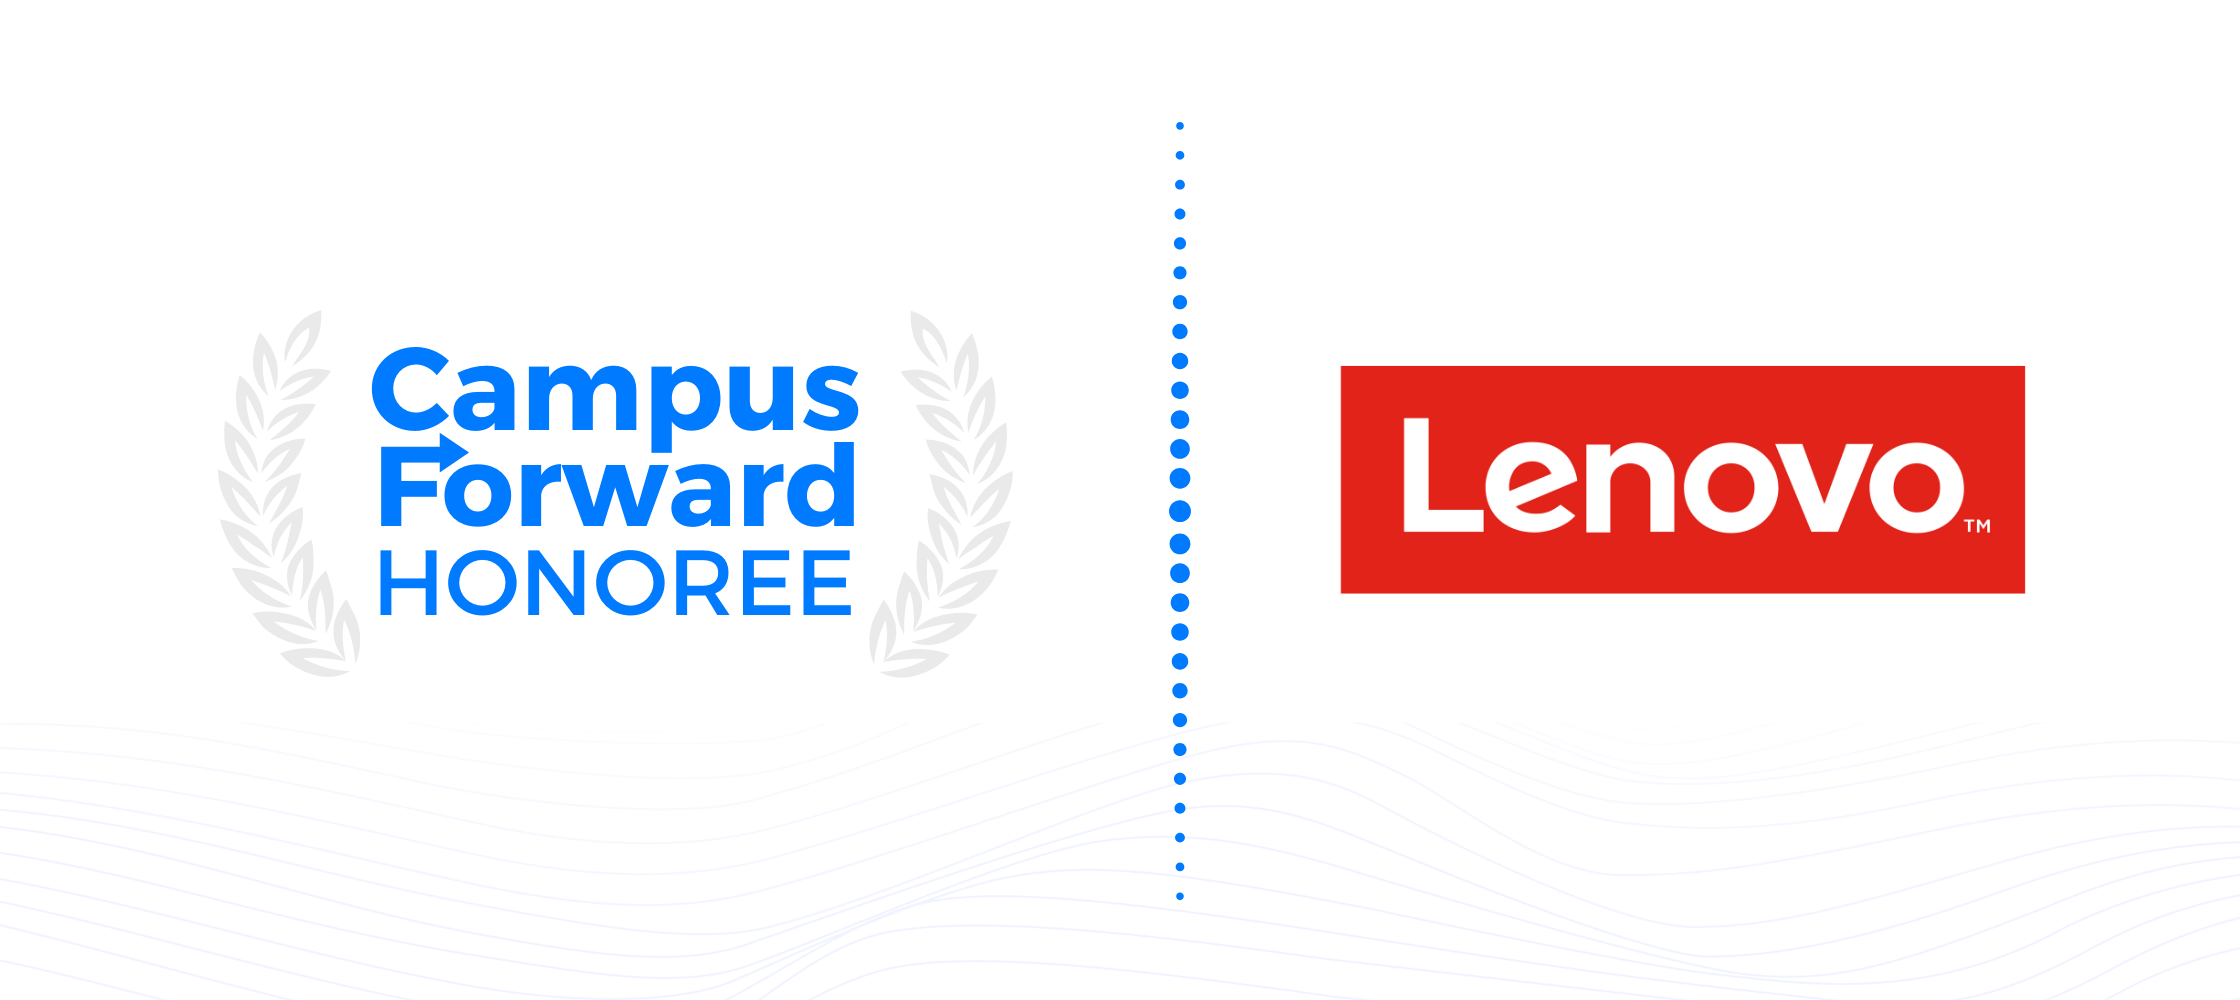 Campus Forward Honoree - Lenovo